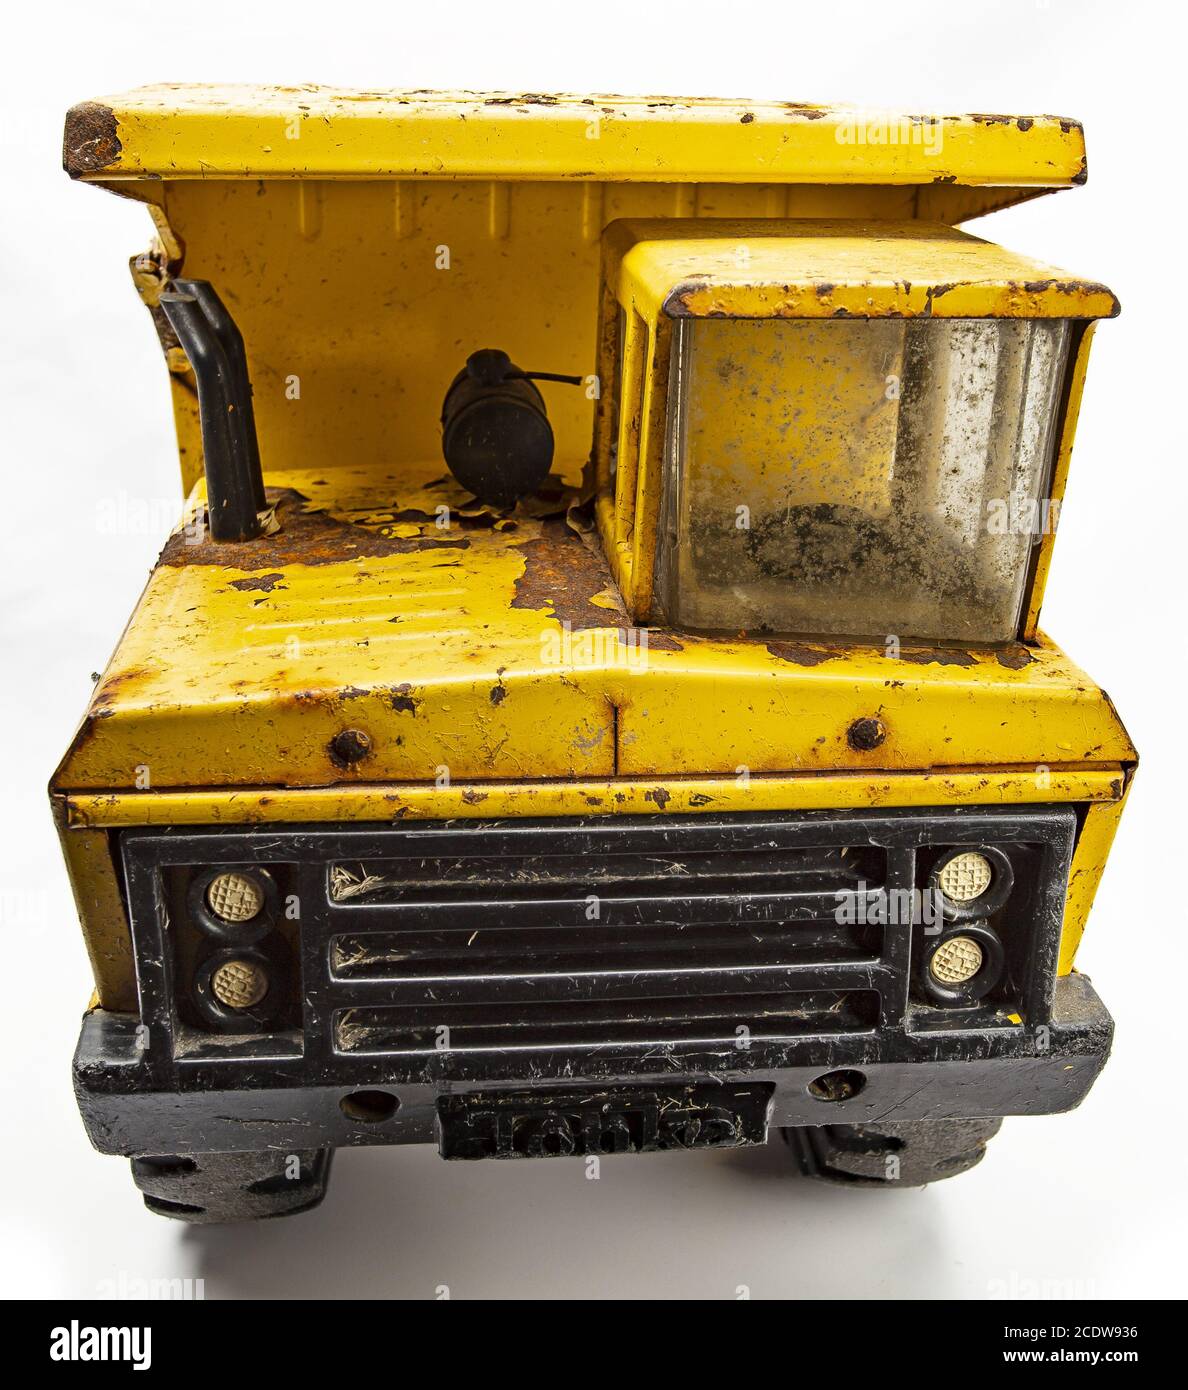 Vintage yellow toy truck Stock Photo